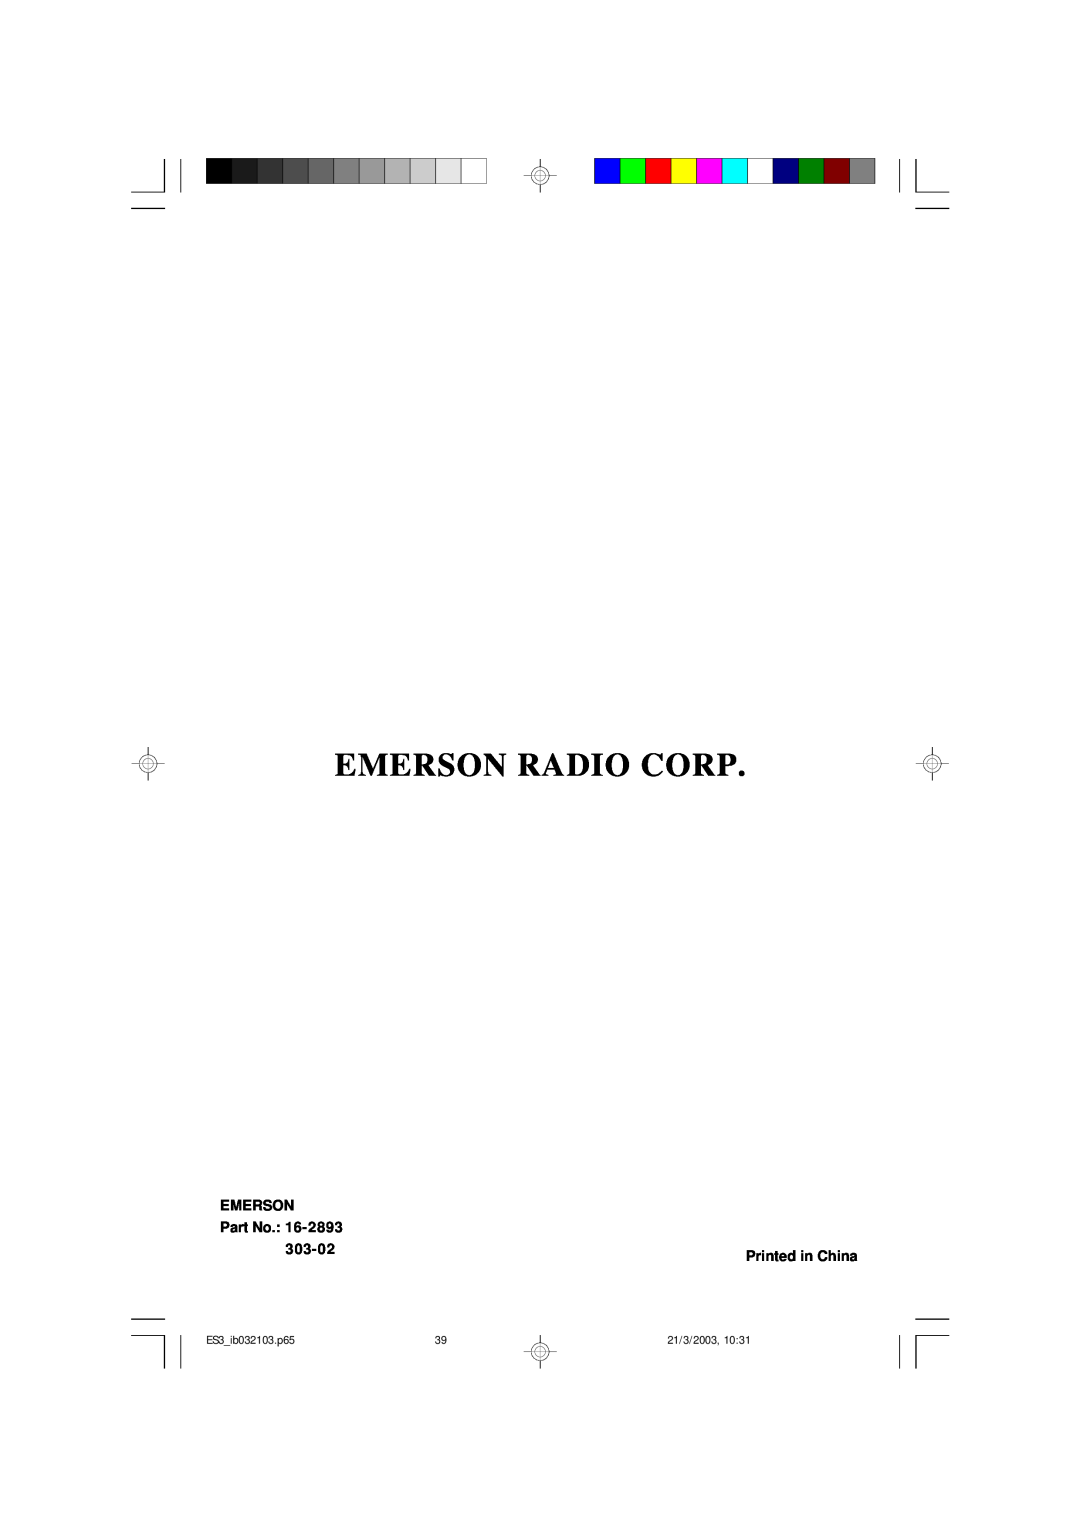 Emerson owner manual Emerson Radio Corp, 303-02, ES3 ib032103.p65, 21/3/2003, 10 